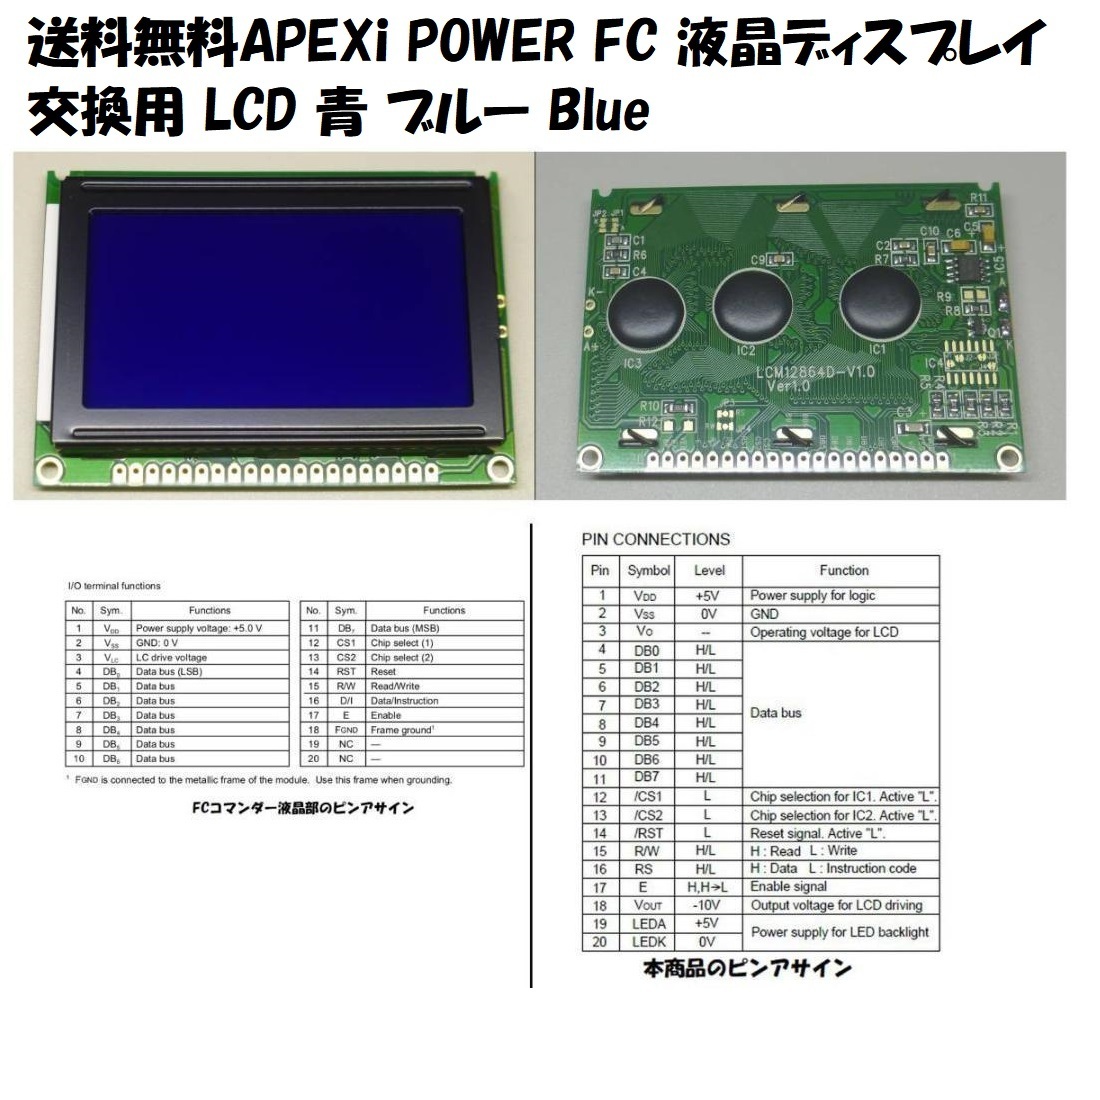 Apexi POWER FC & FCコマンダーセットの価格比較 - みんカラ